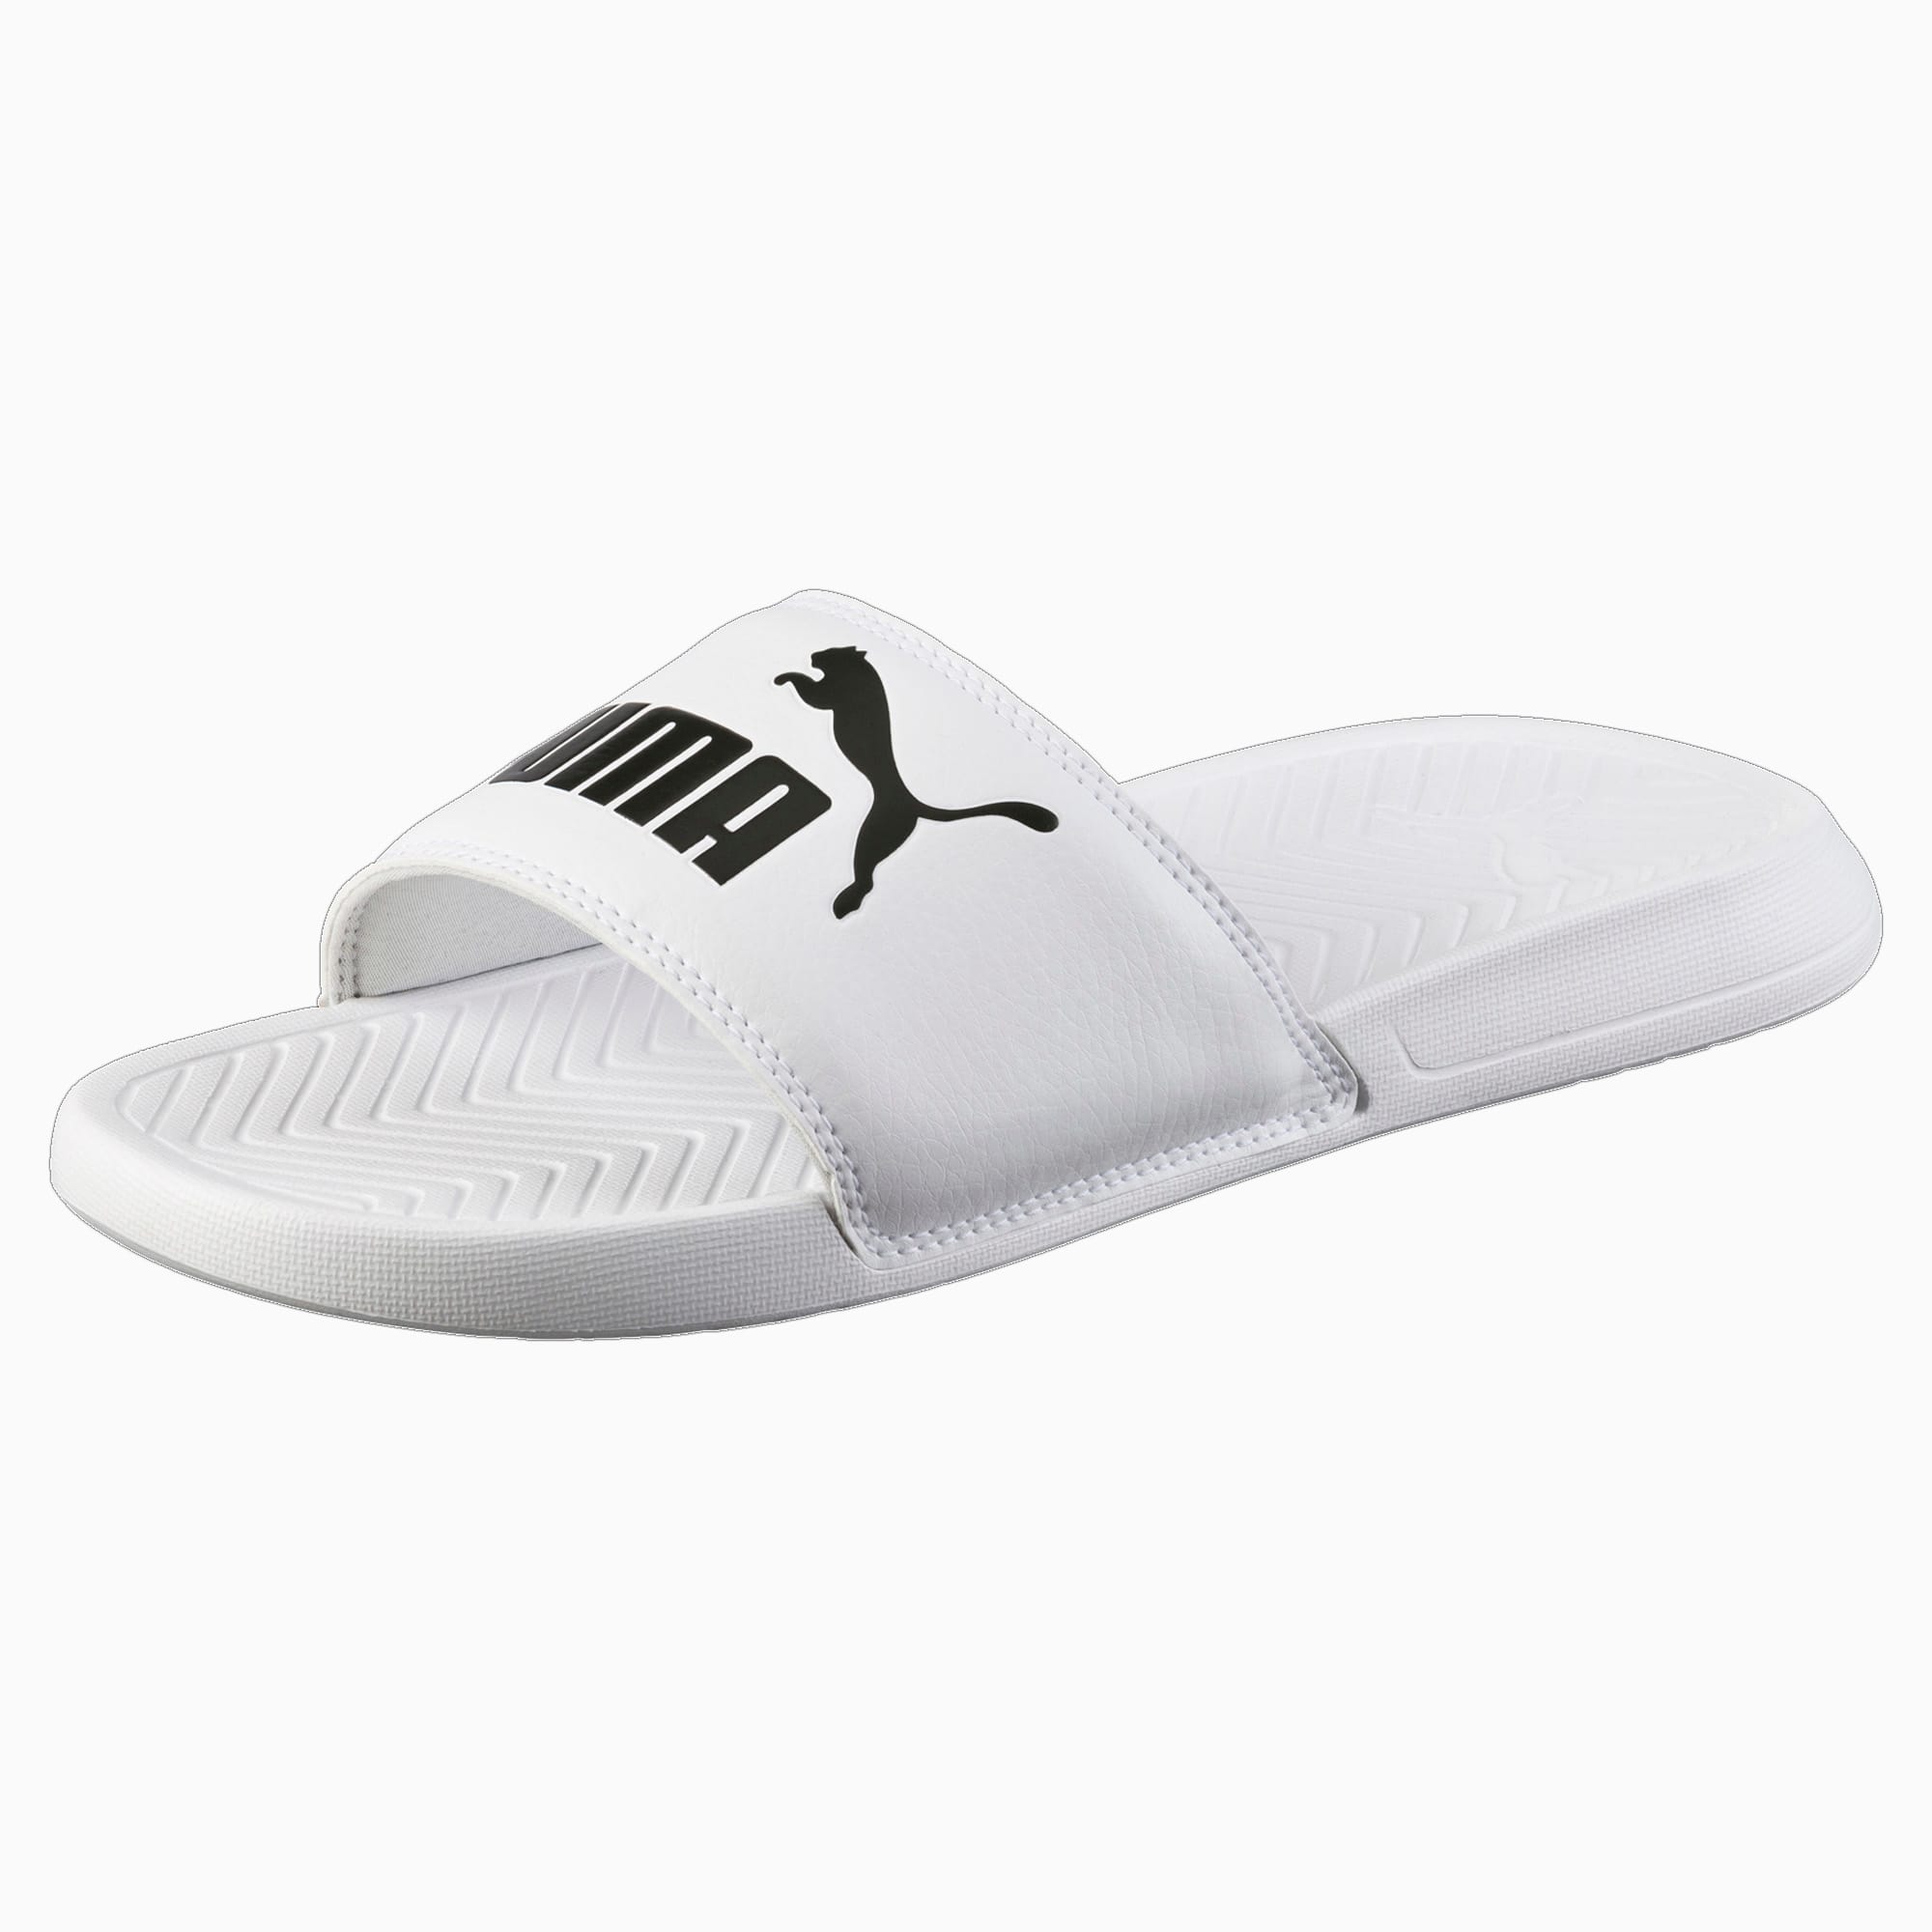 Popcat Slide Sandals | PUMA Gifts under £20 | PUMA United Kingdom